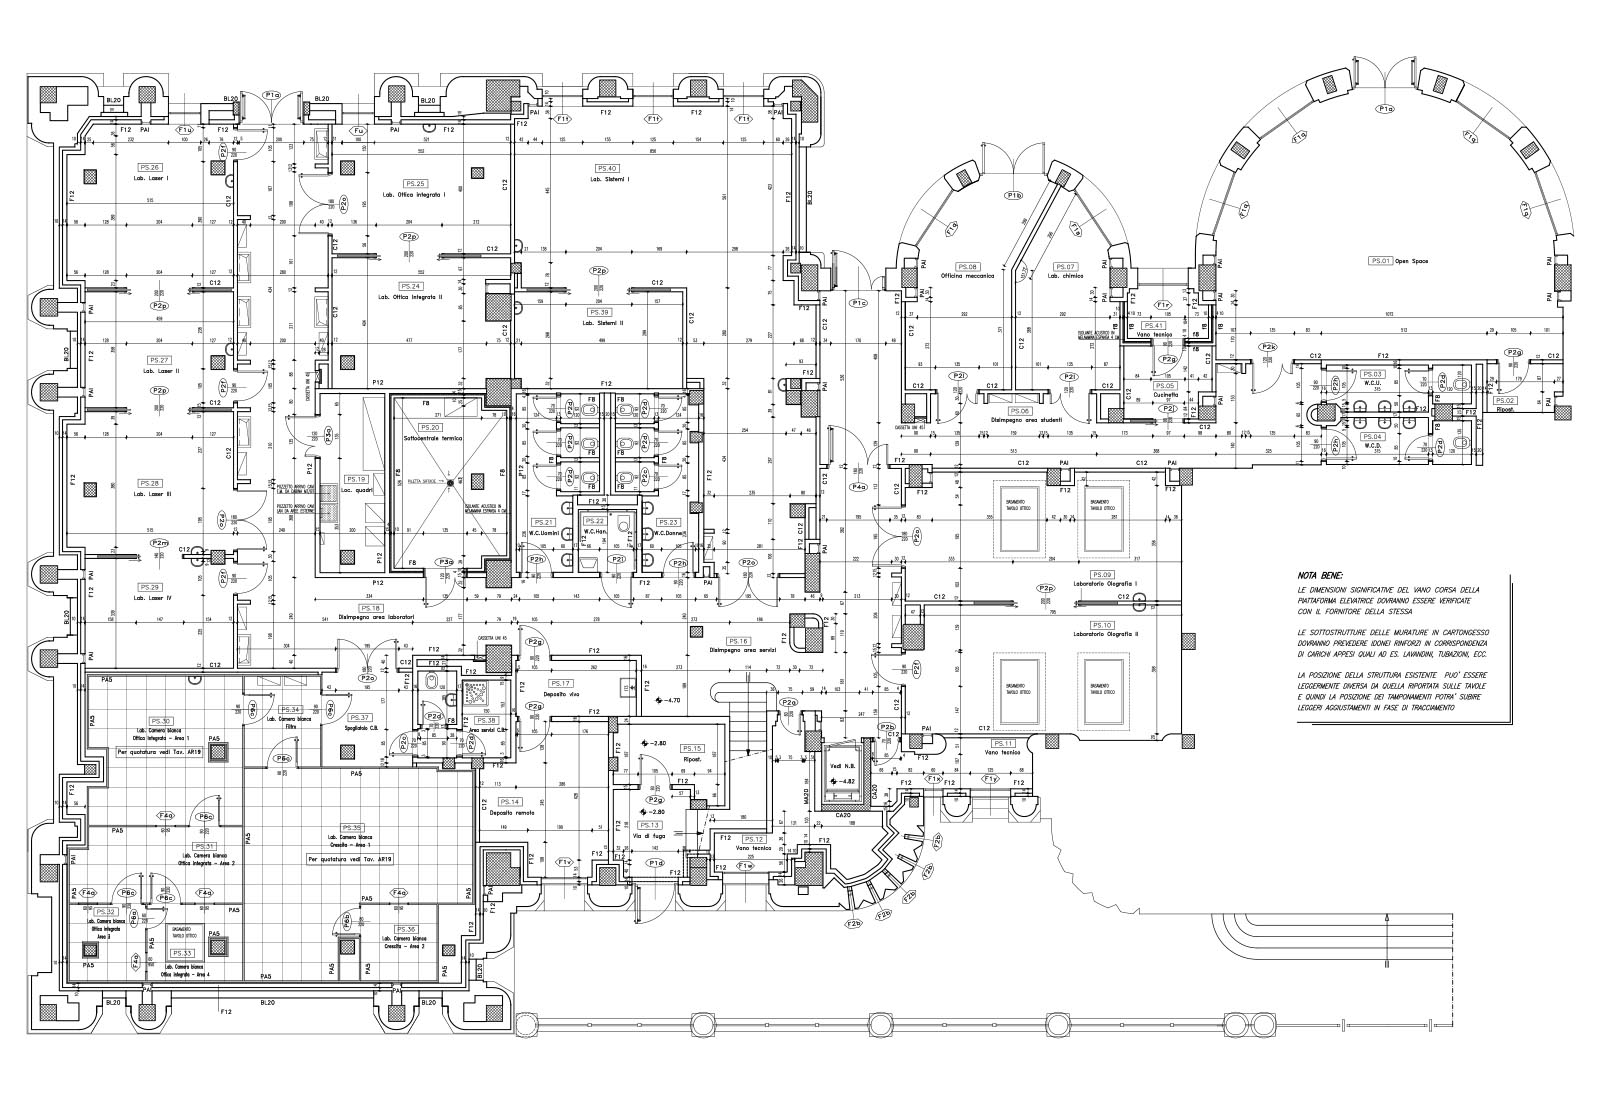 Photonics laboratories Politecnico di Milano - Ground floor plan